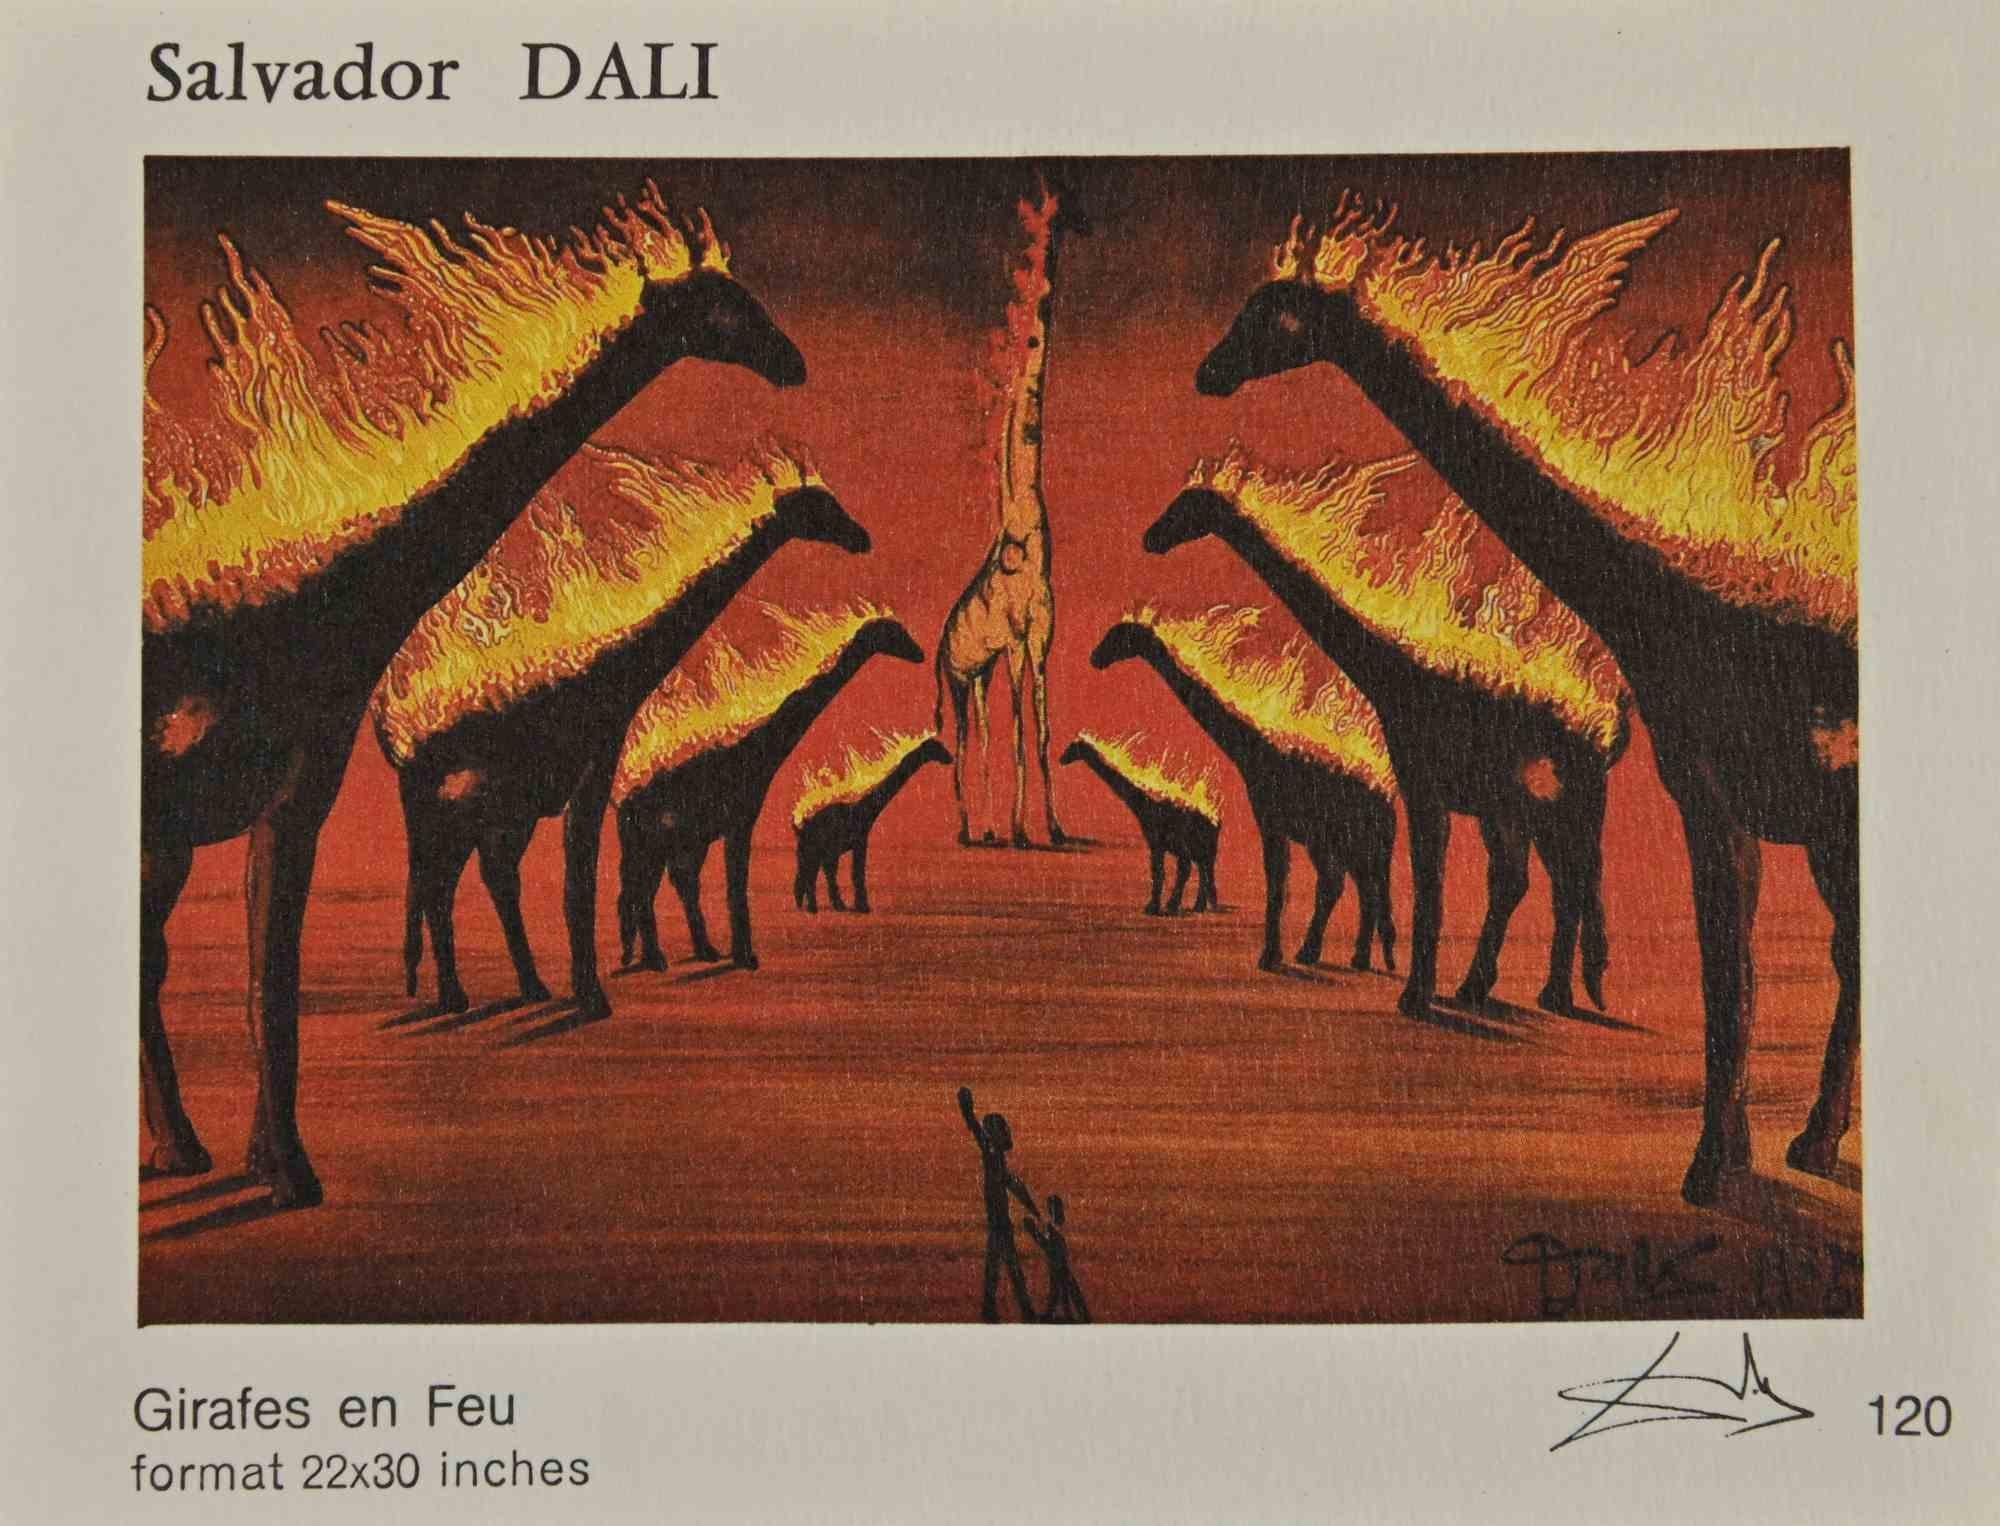 Collection of Vintage Cards After Salvador Dalì - 1980s For Sale 6